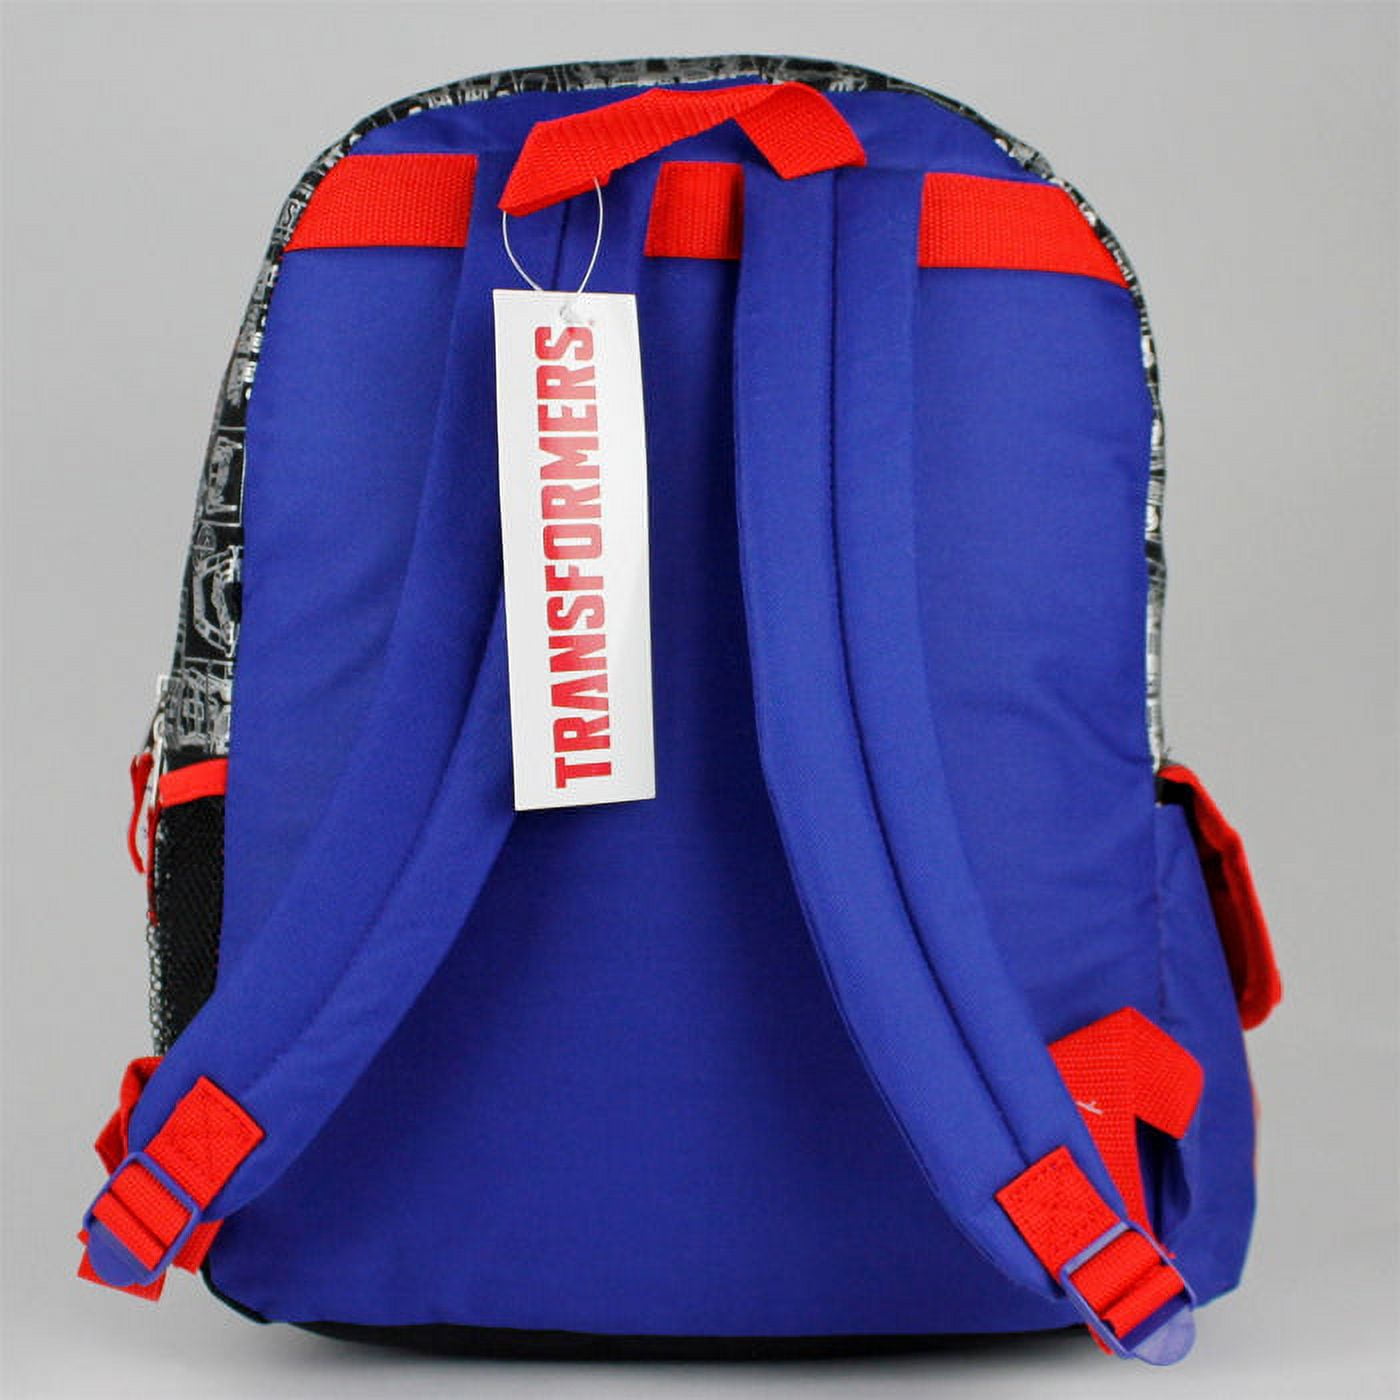 Wholesale Transformers 5pc Backpack Set- 16 MULTICOLOR/BLUE